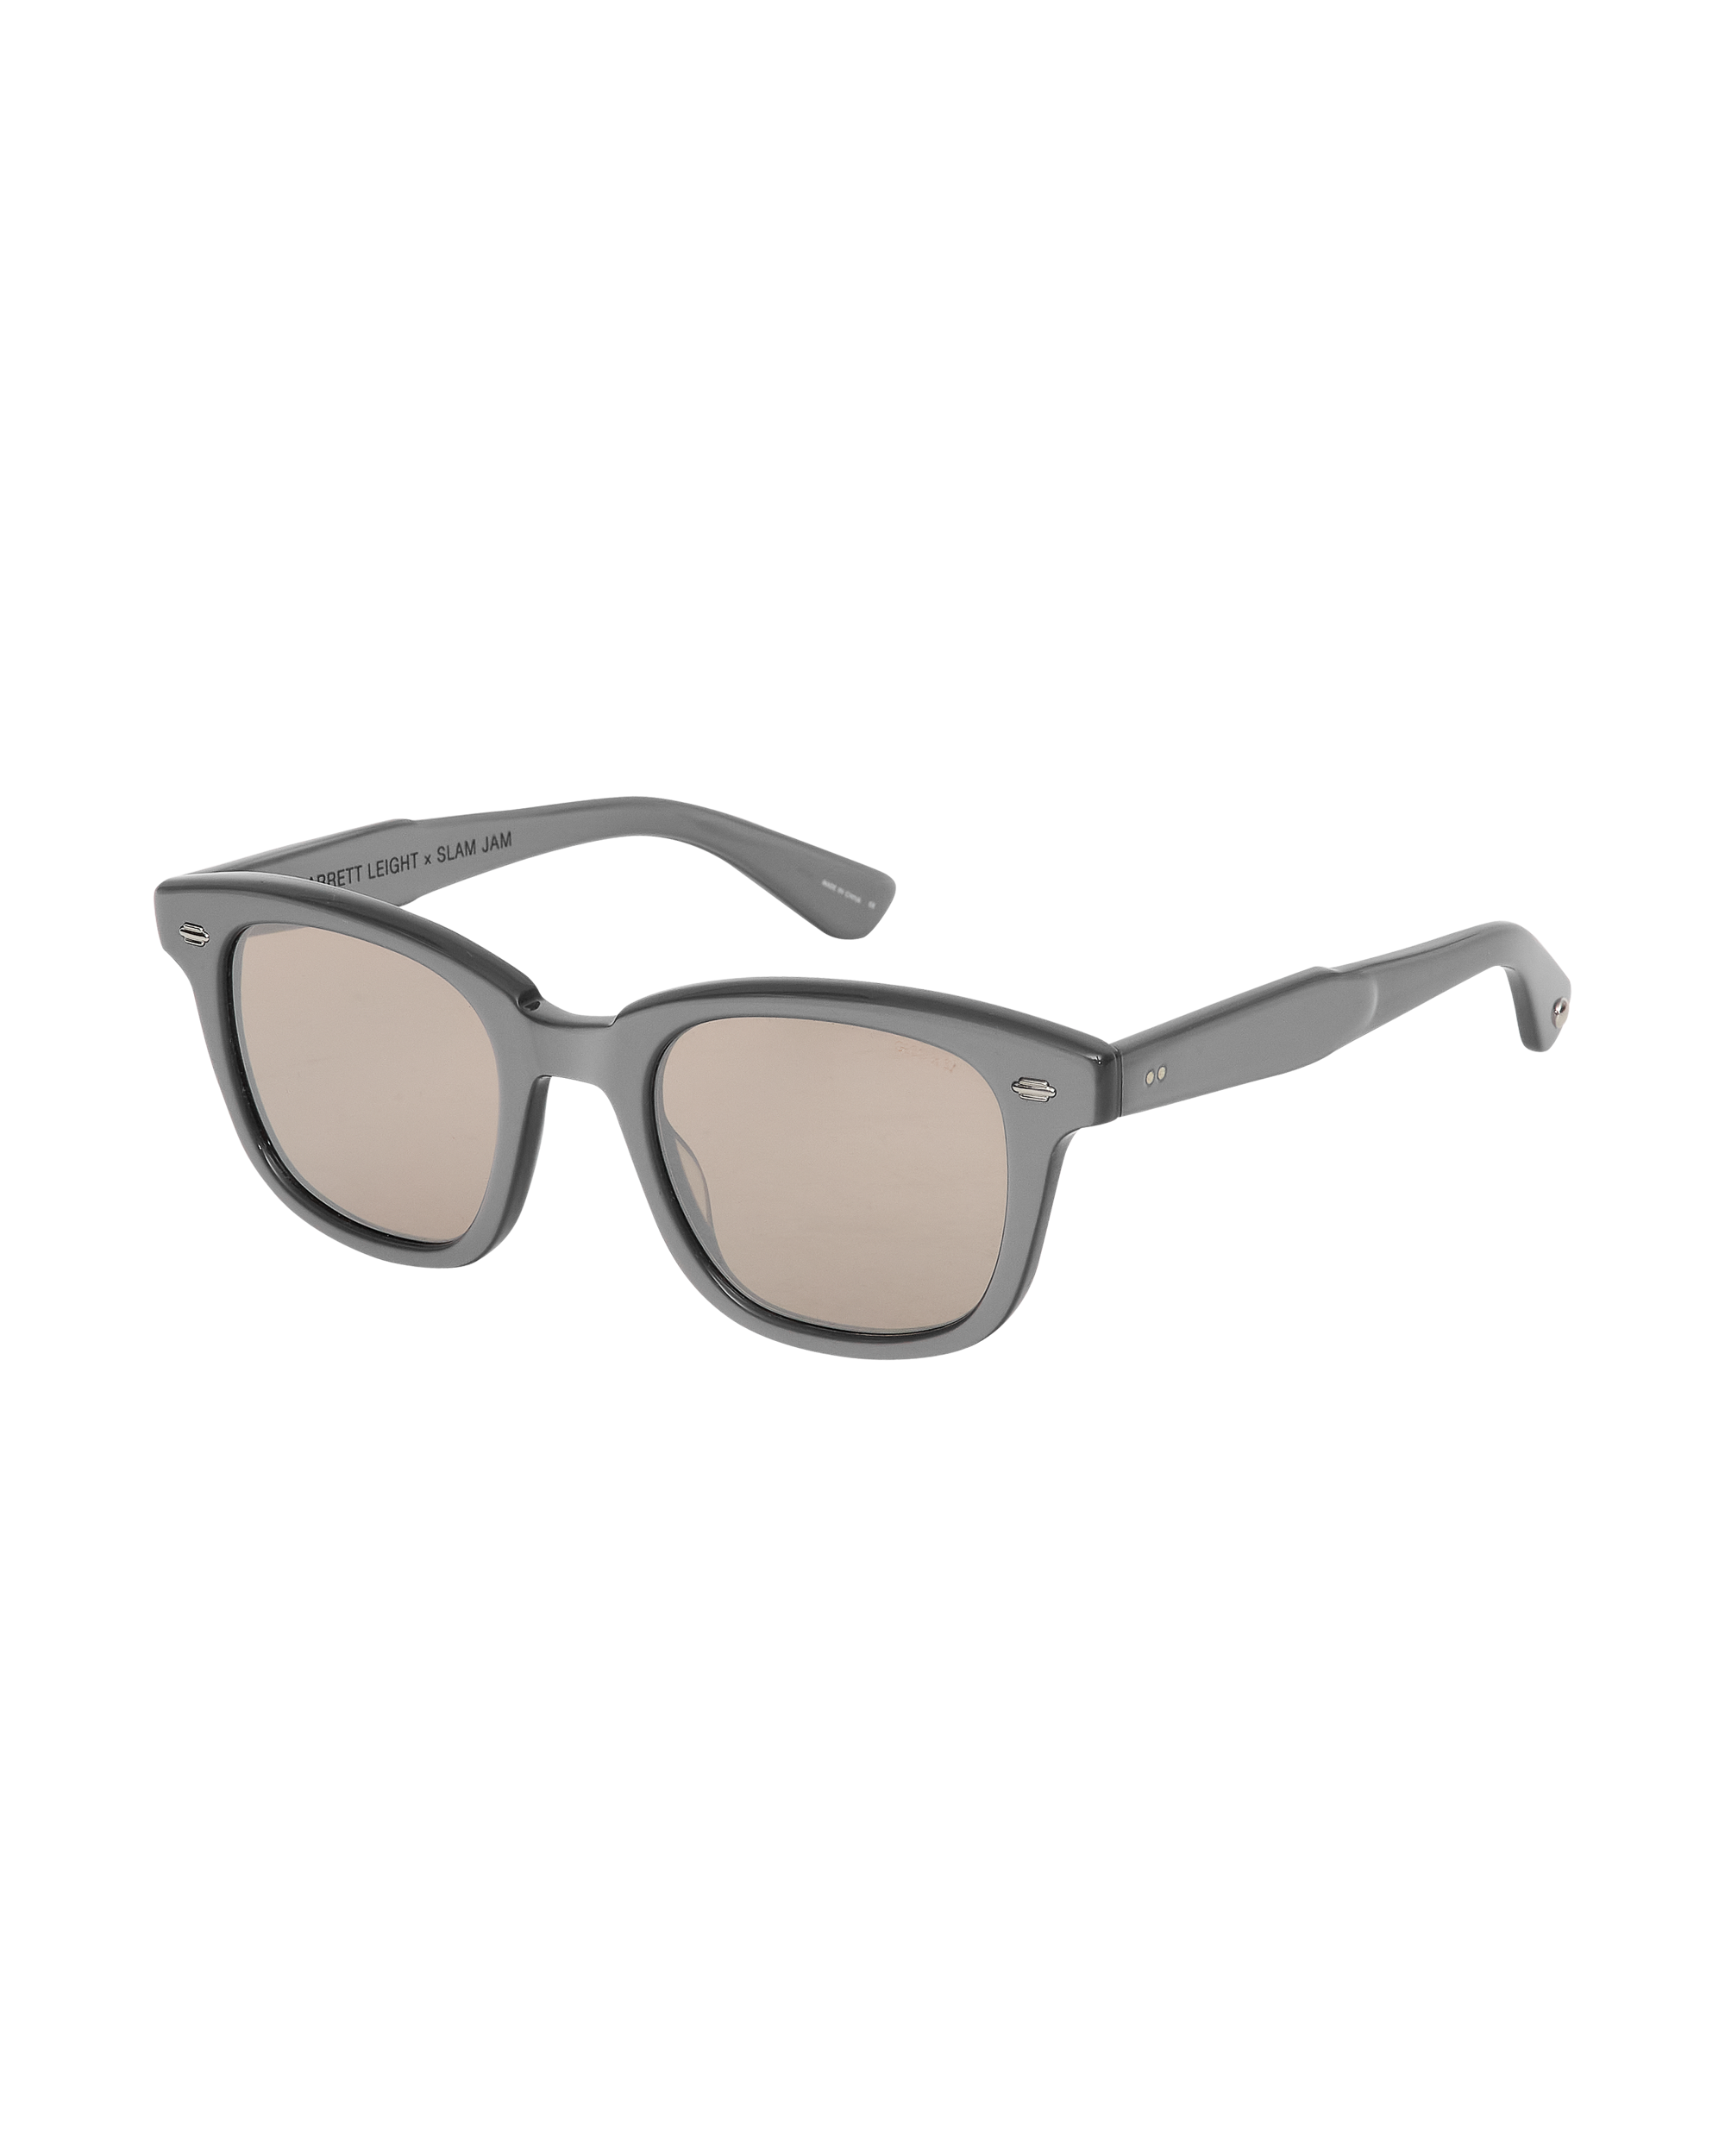 Garrett Leight GL x Slam Jam Calabar 49 Chrome/Se-Flat Black Blaze Mir Eyewear Sunglasses 2062-49 CSFBKBZM